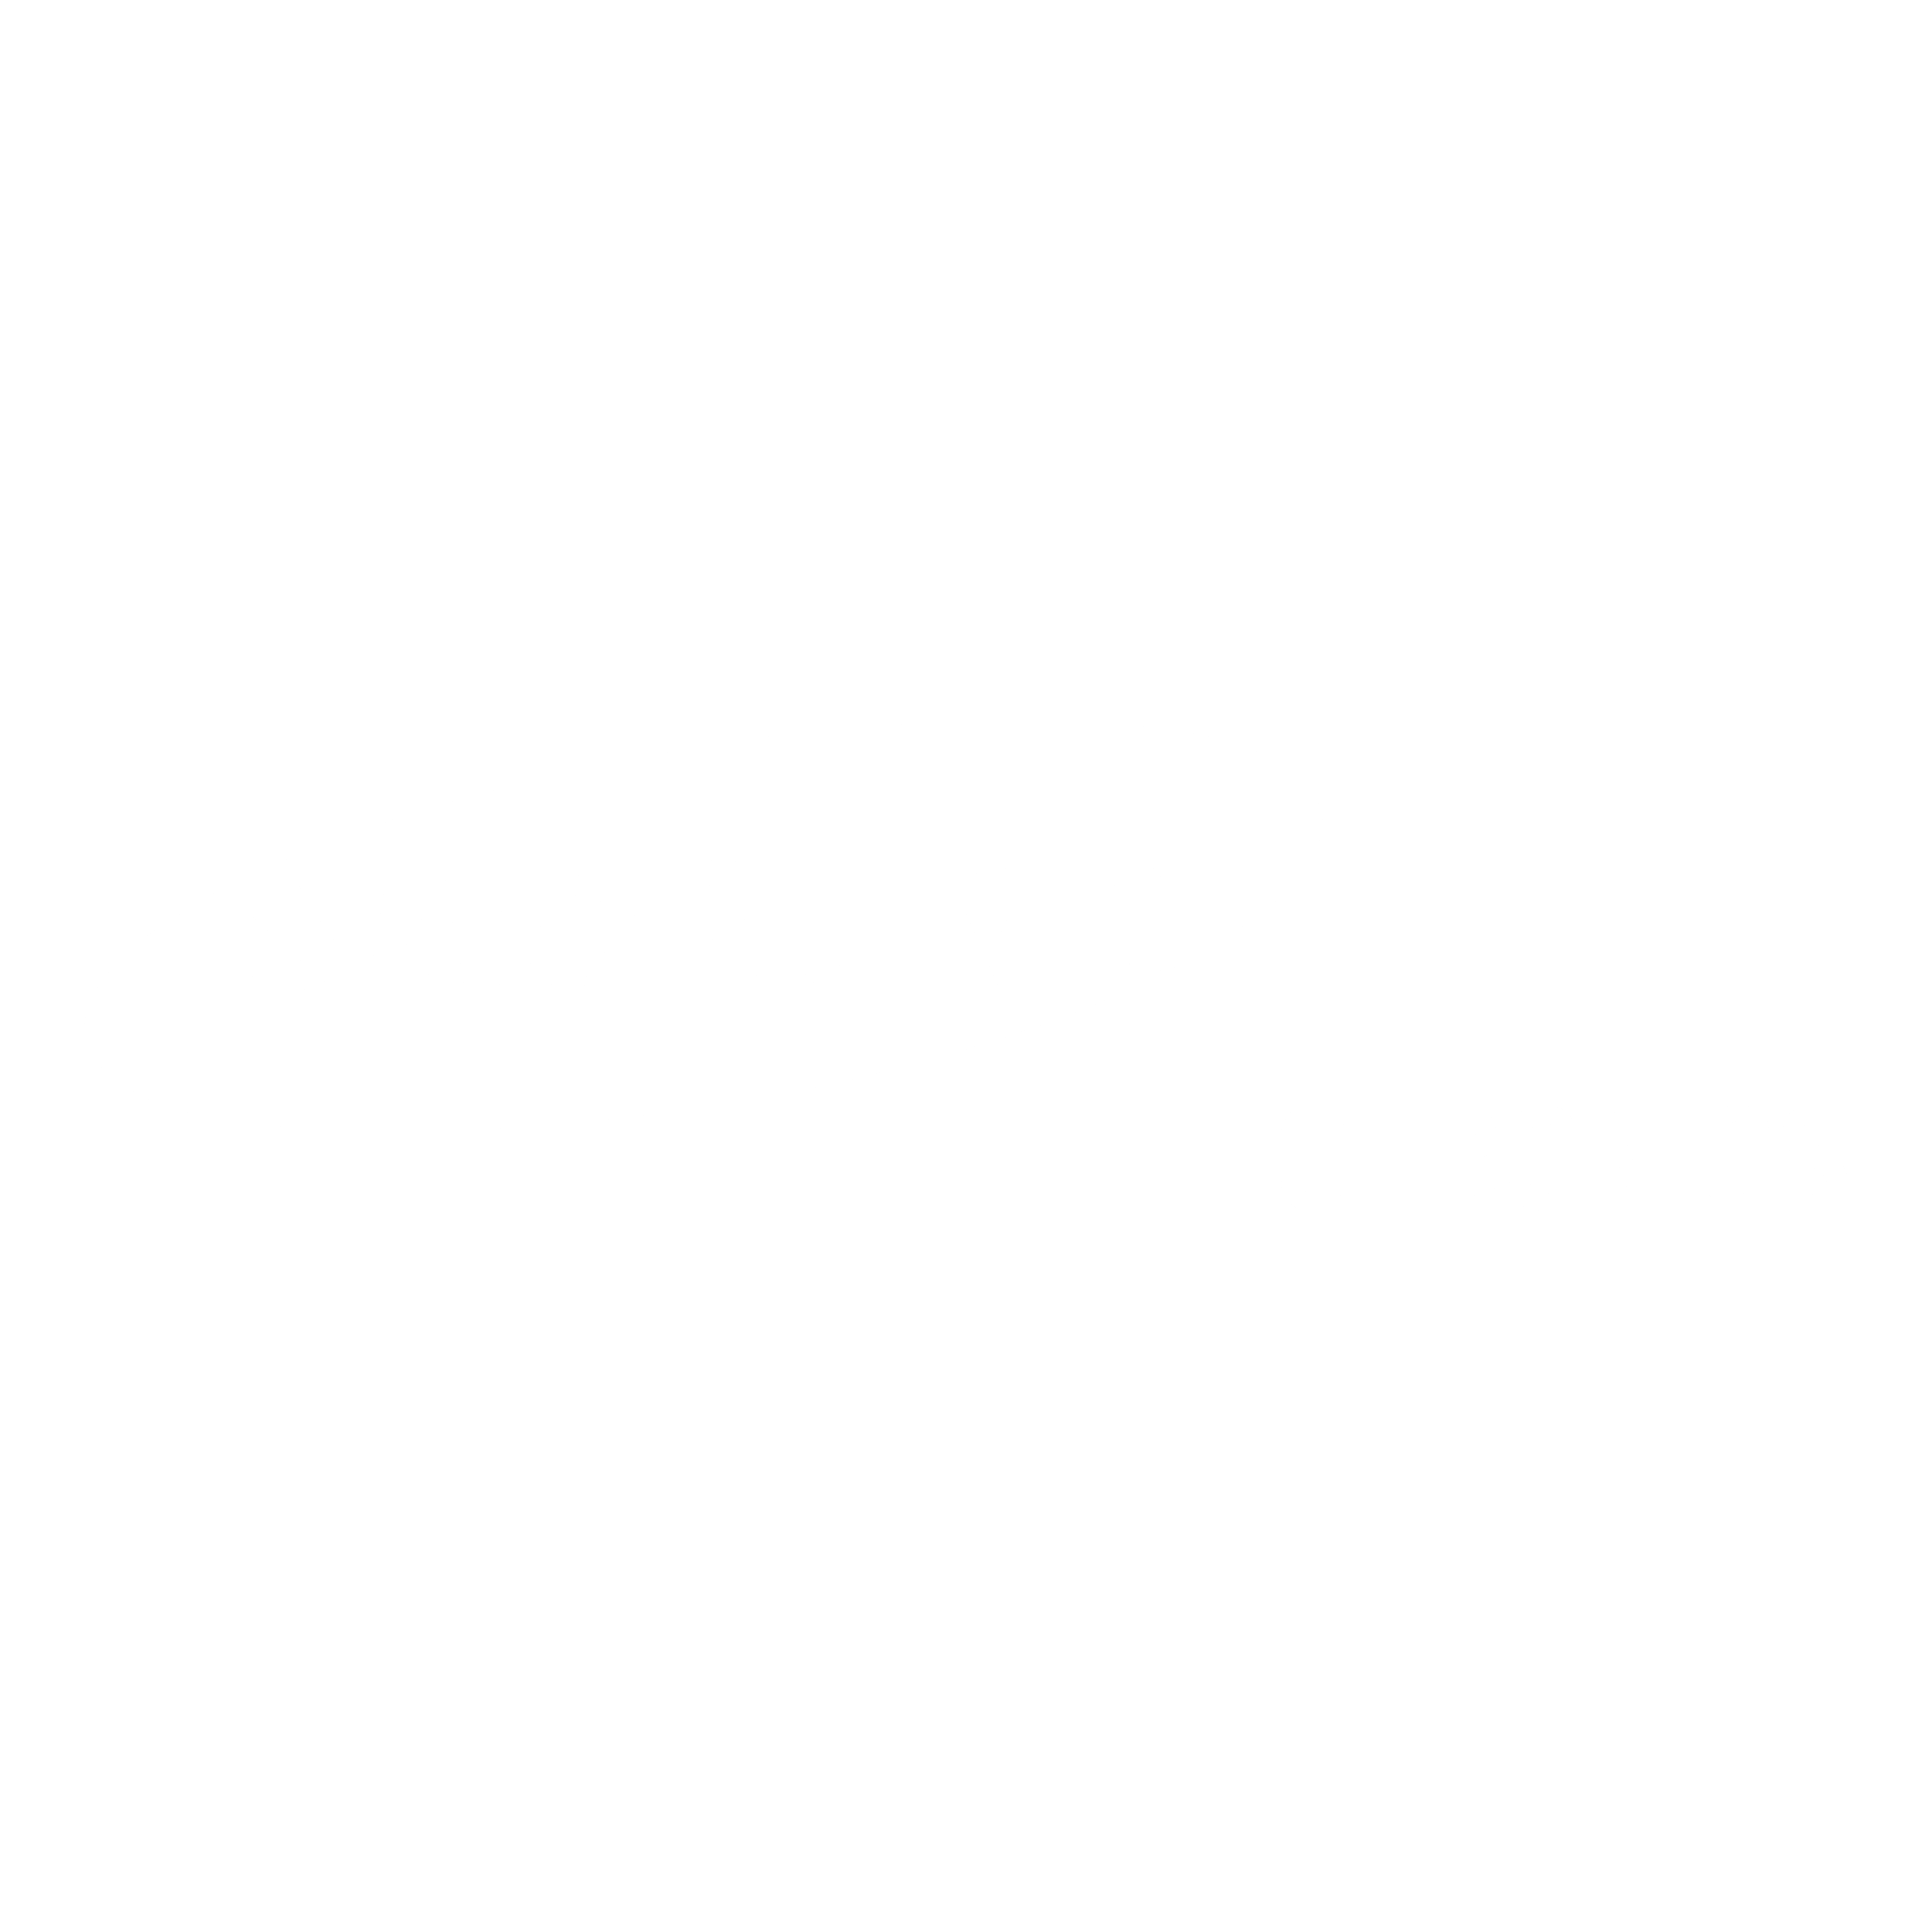 Samsung Electronics Logo - Samsung Electronics Logo PNG Transparent & SVG Vector - Freebie Supply